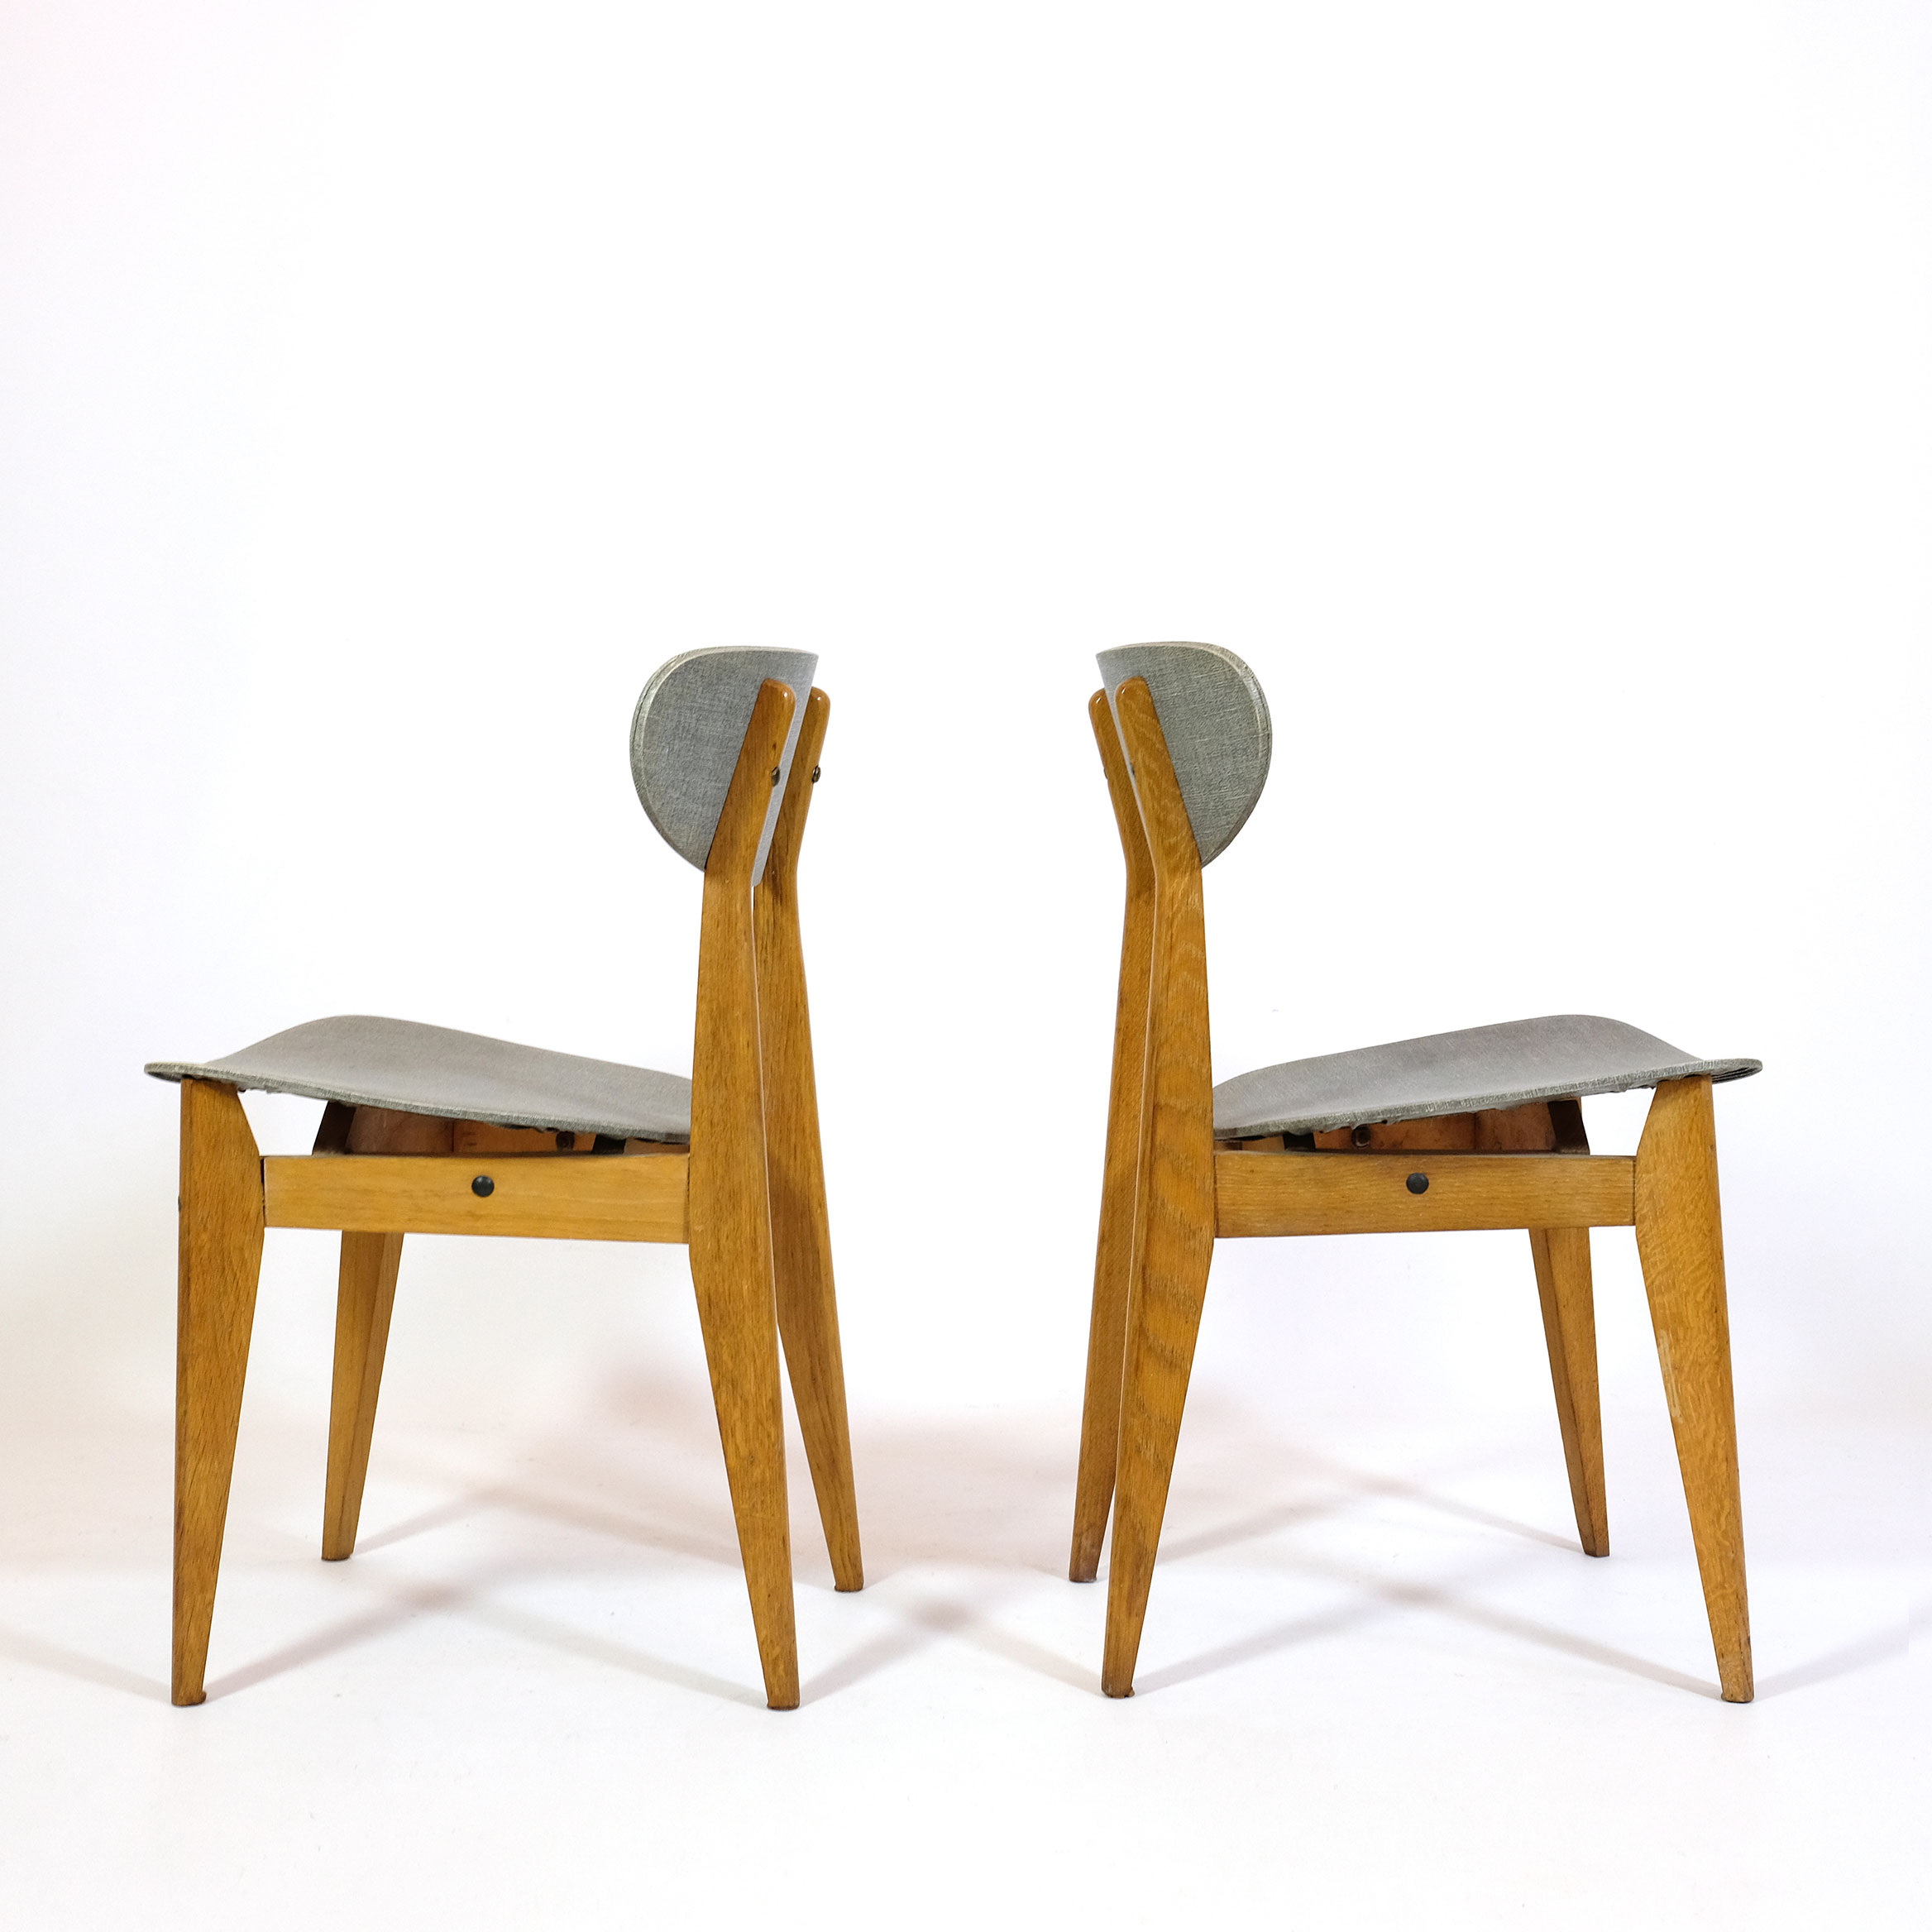 Roger Landault, pair of chairs, Sentou, France, 1950's.